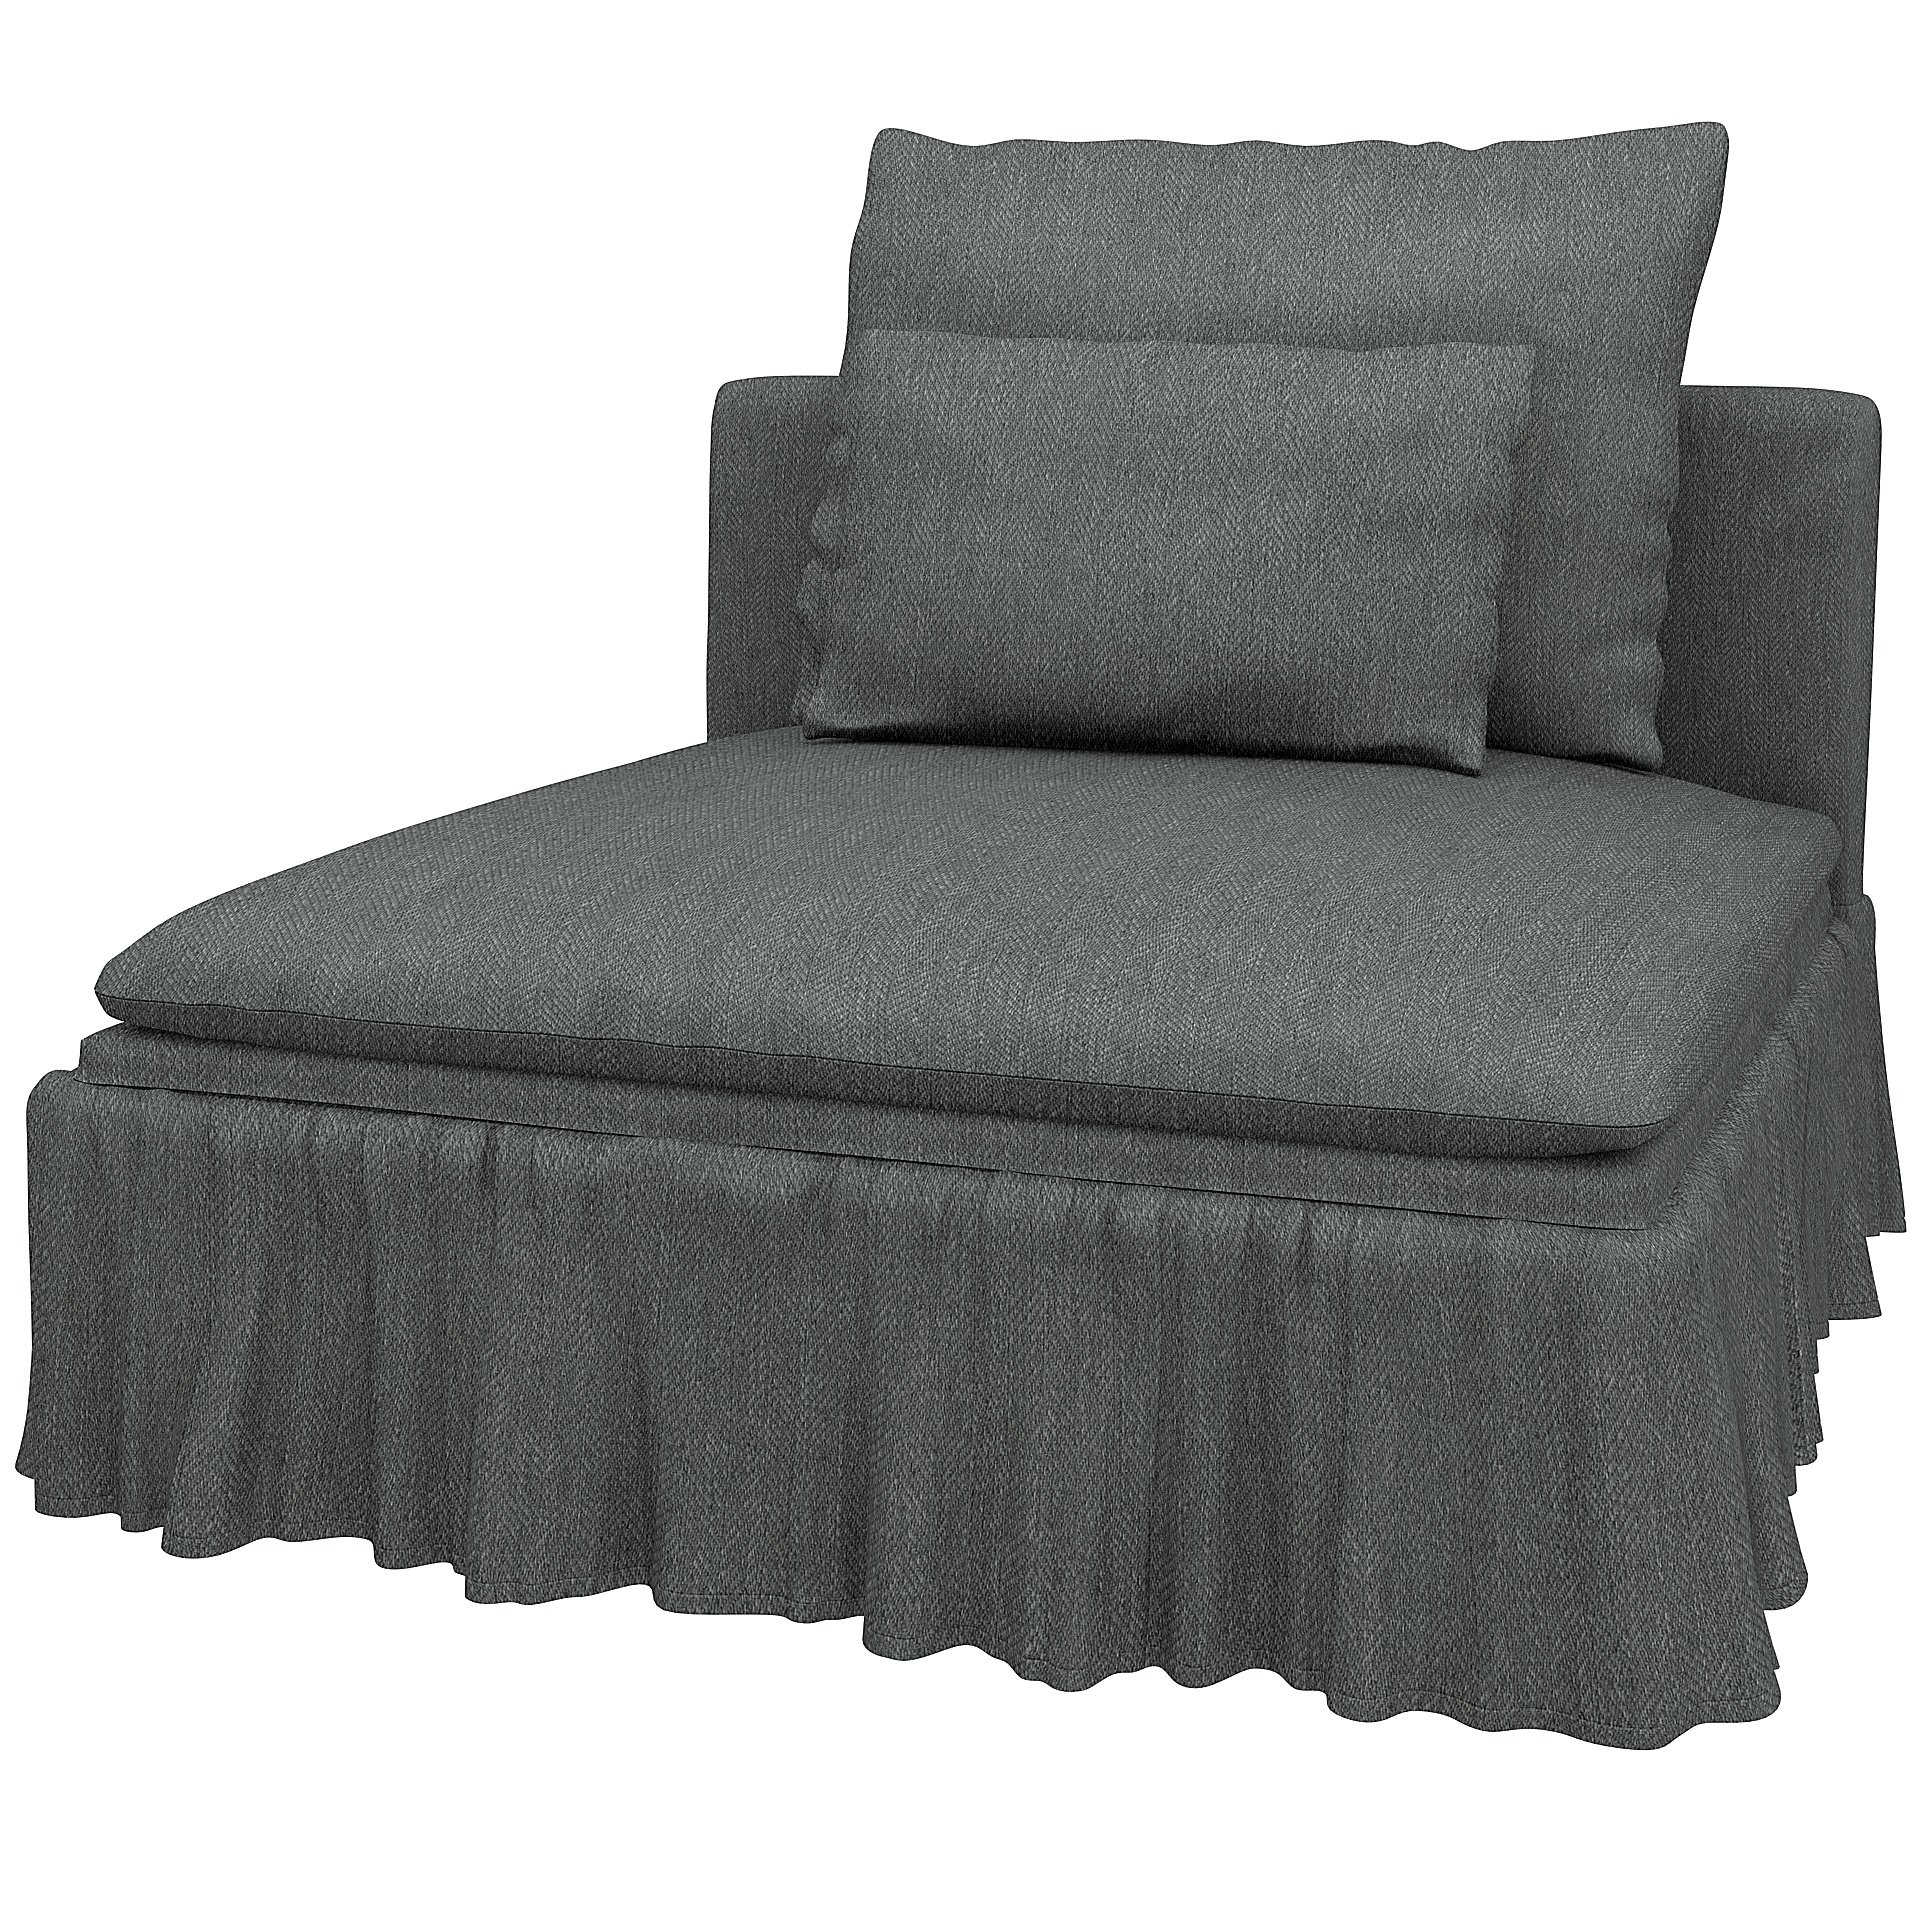 IKEA - Soderhamn 1 seat section cover Maximalist Fit, Laurel, Boucle & Texture - Bemz